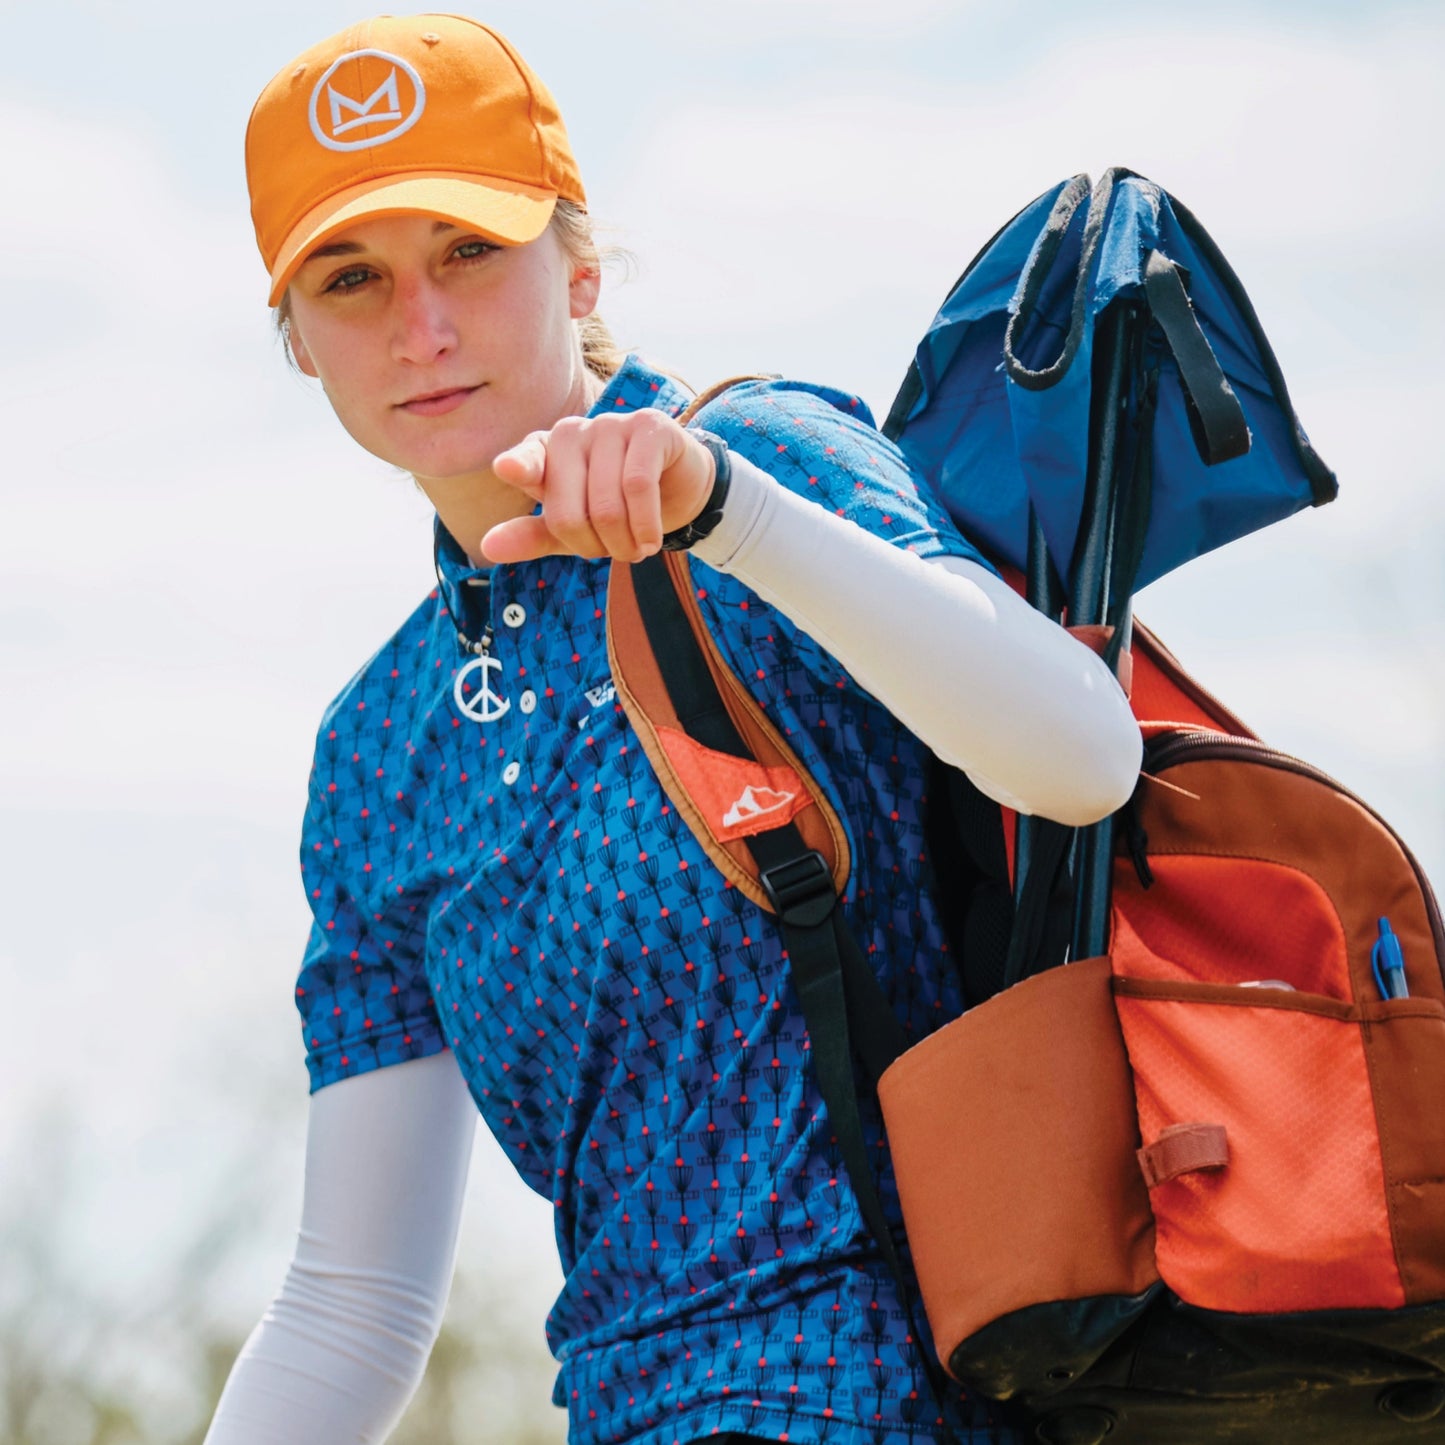 Perks and Re-creation Kat Mertsch Tour Series Pro Hat - Orange Disc Golf